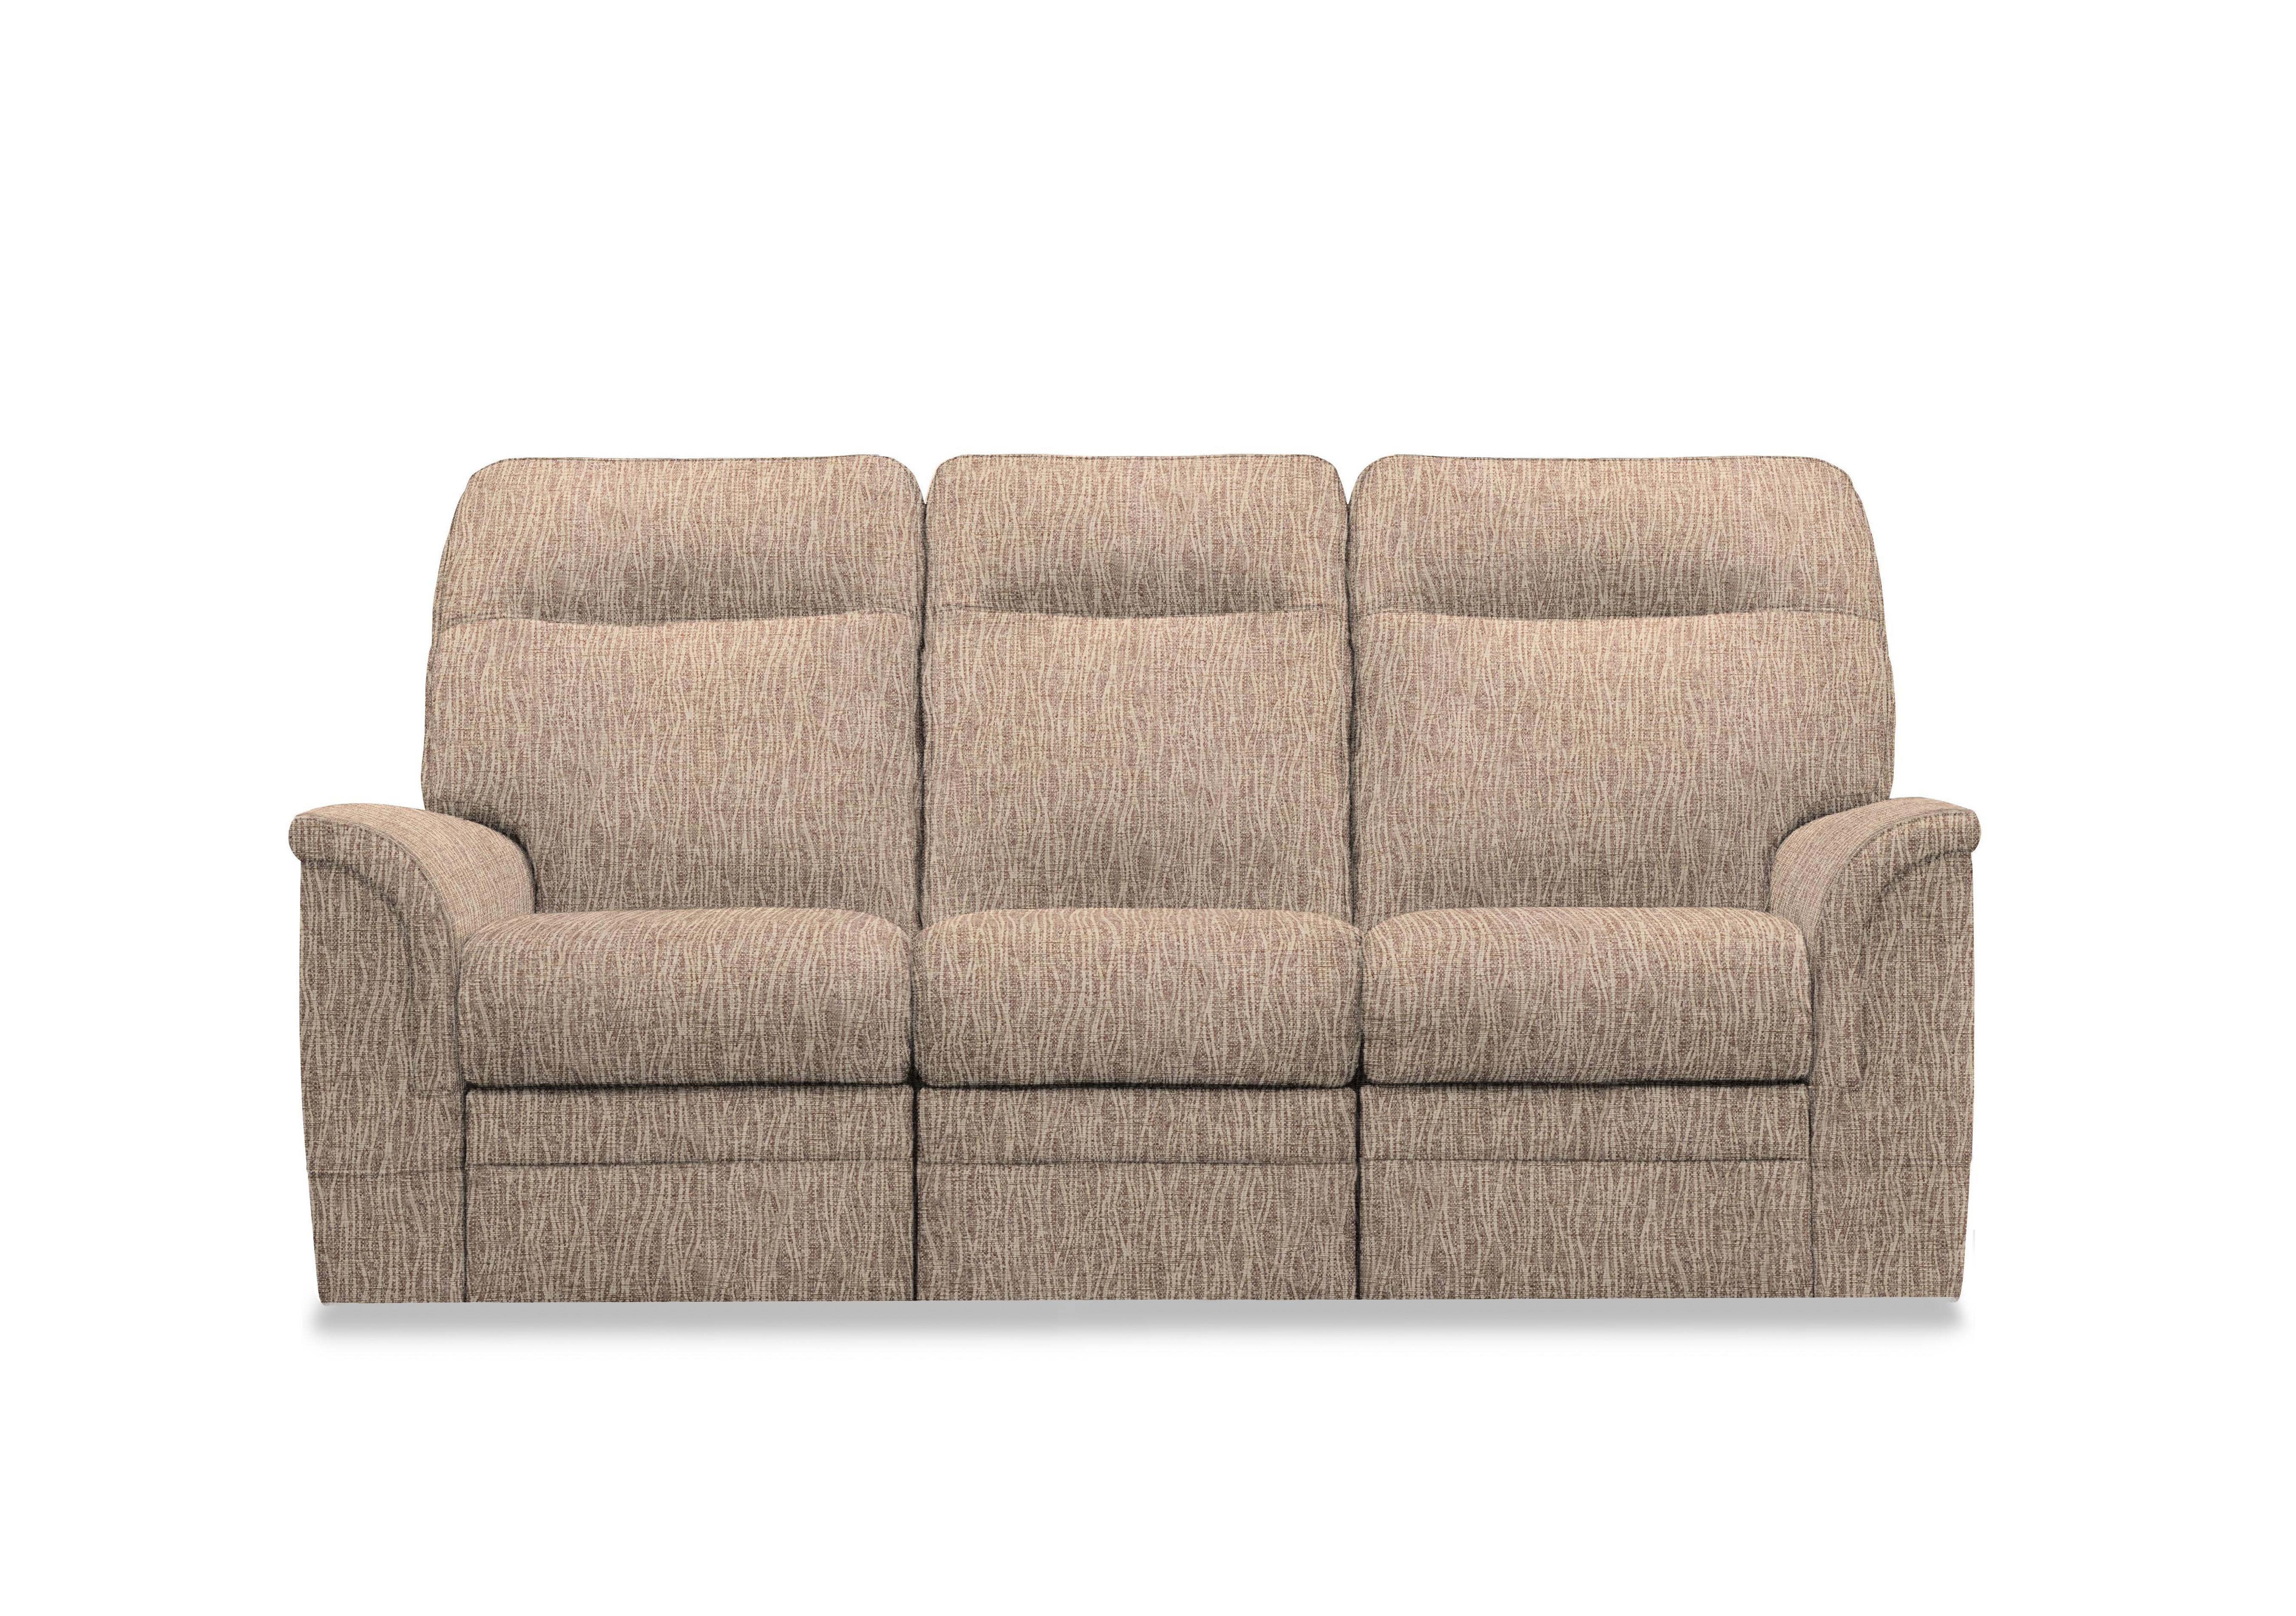 Hudson 23 Fabric 3 Seater Sofa in Dune Sand 001482-0054 on Furniture Village